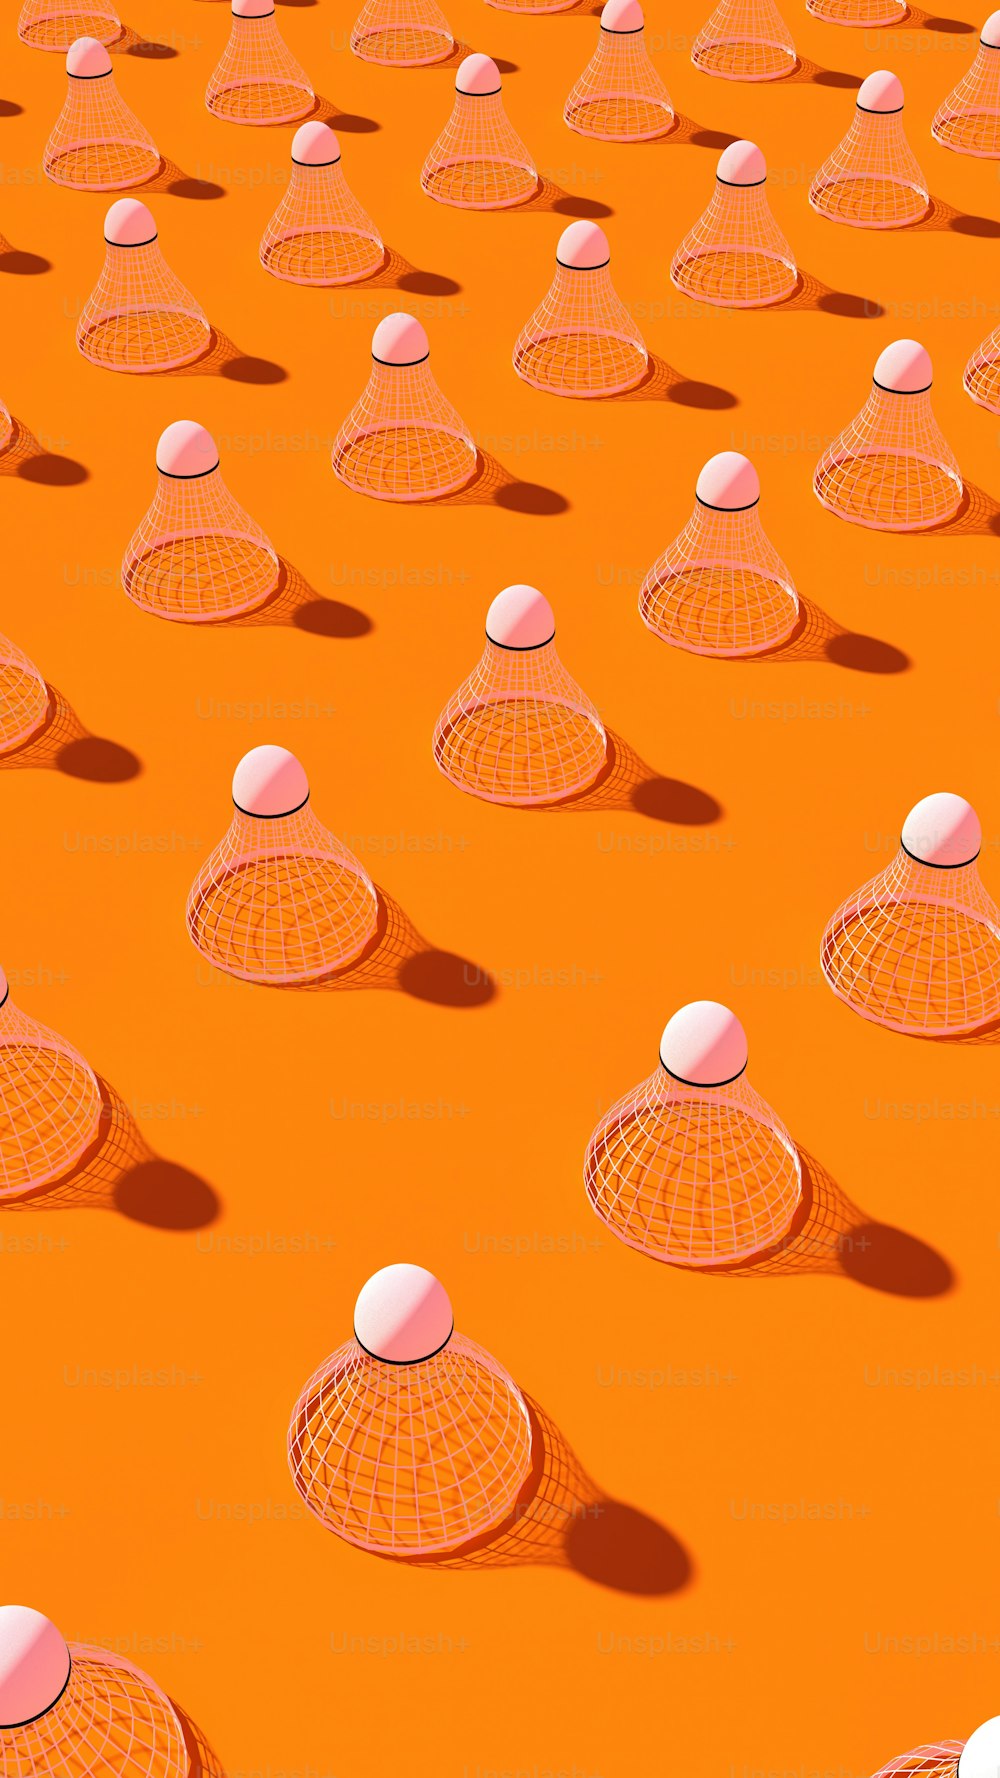 Un gruppo di palline bianche sedute sopra una superficie arancione